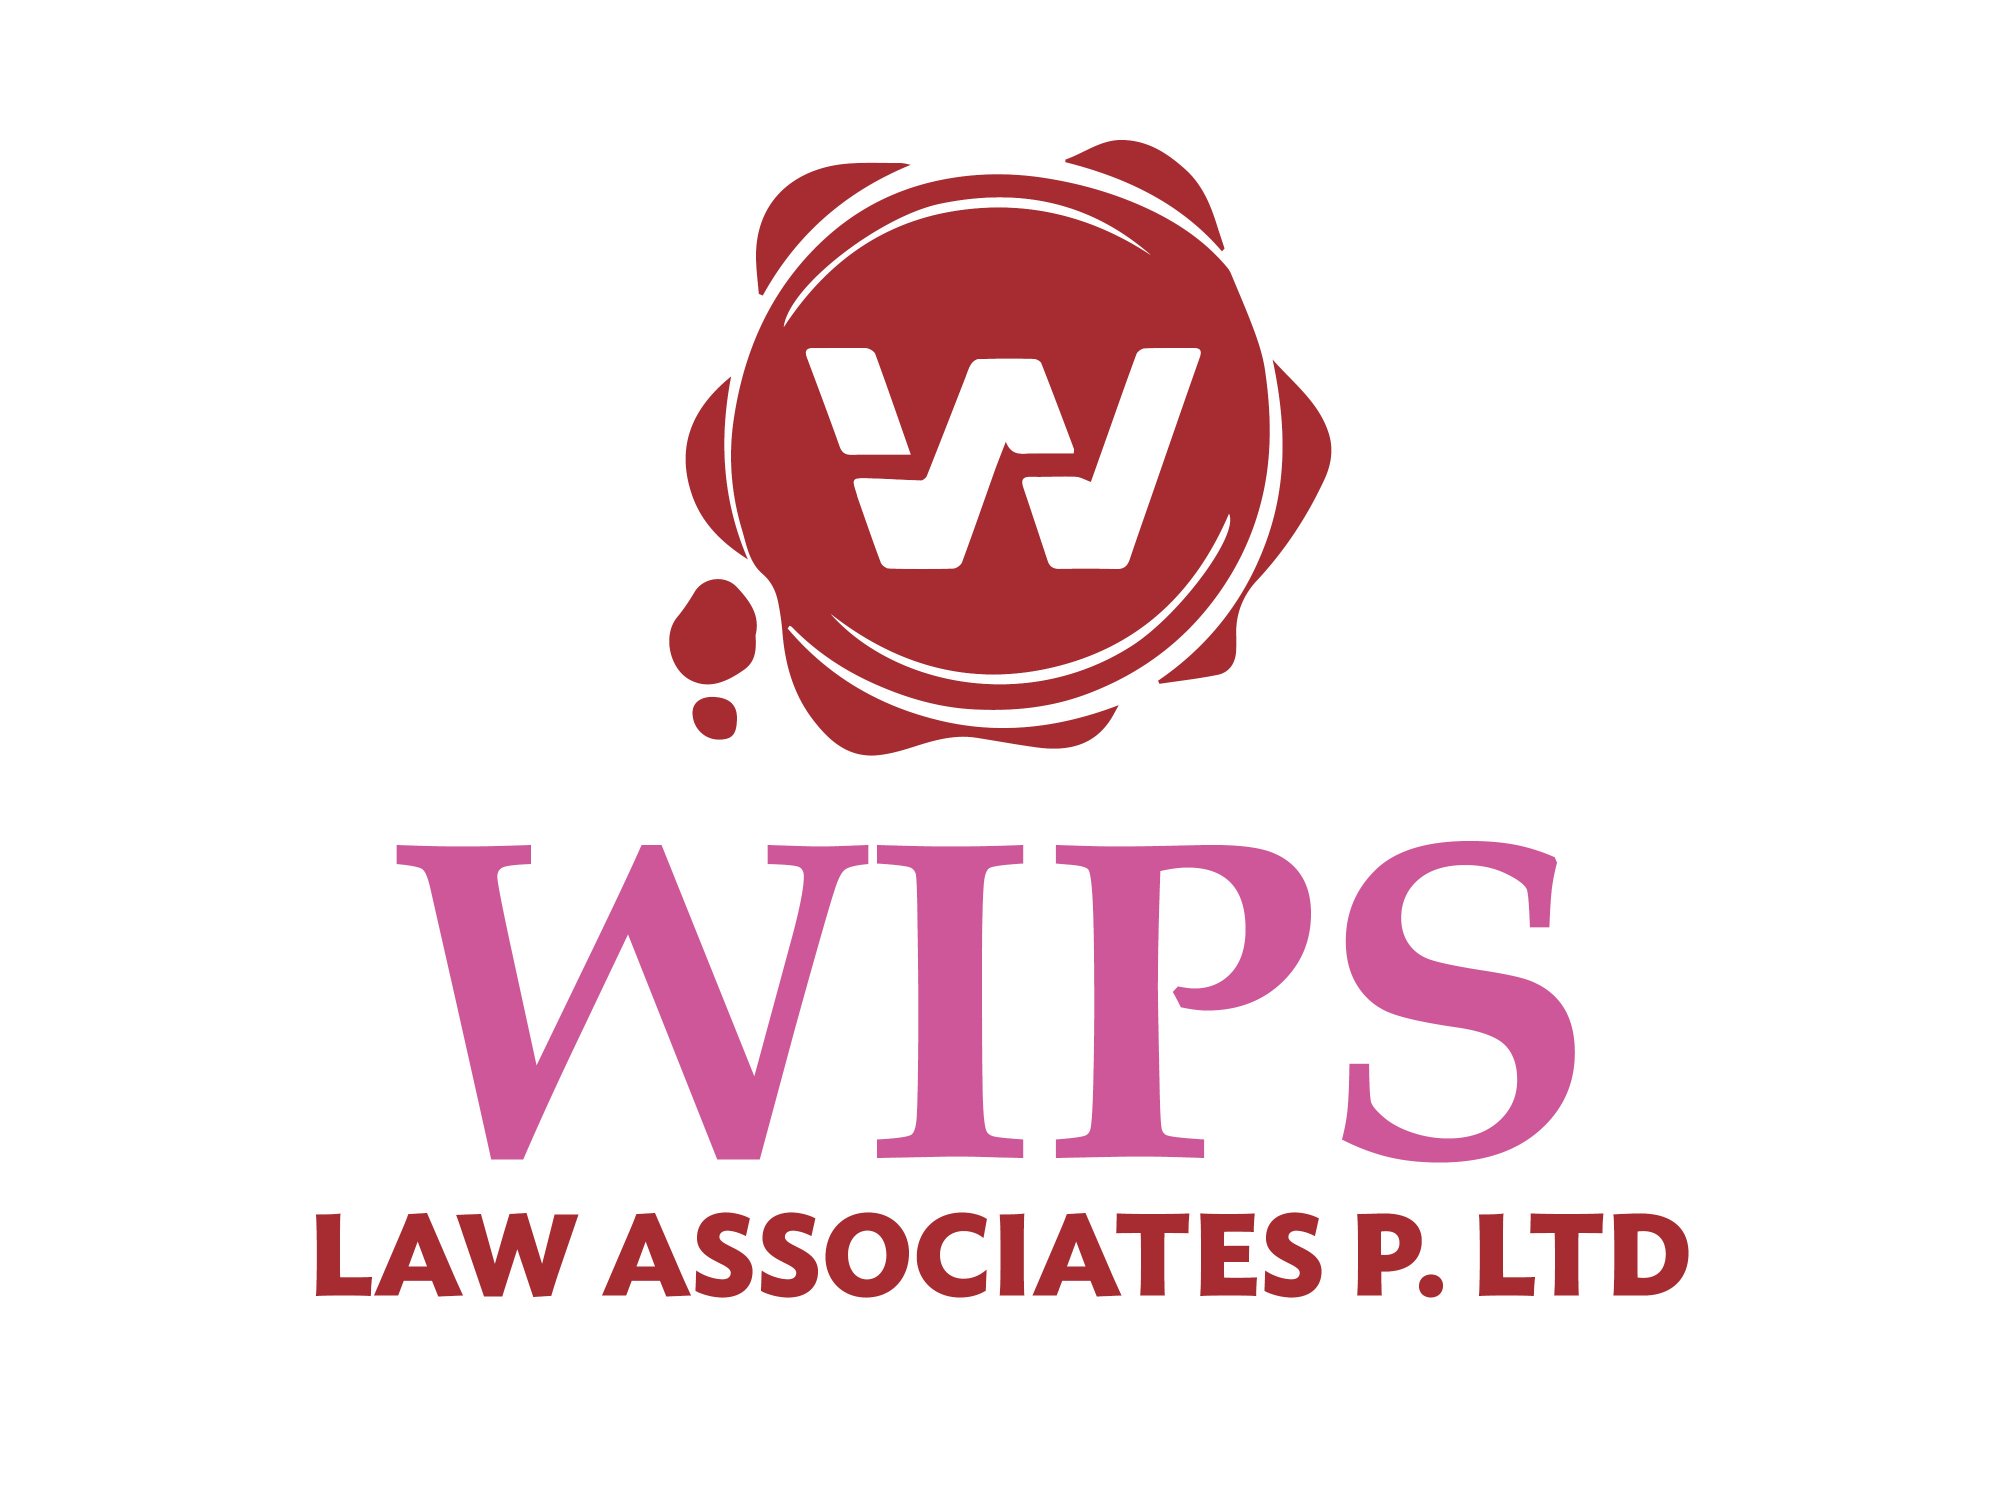 WIPS Law Associates P. Ltd. cover photo